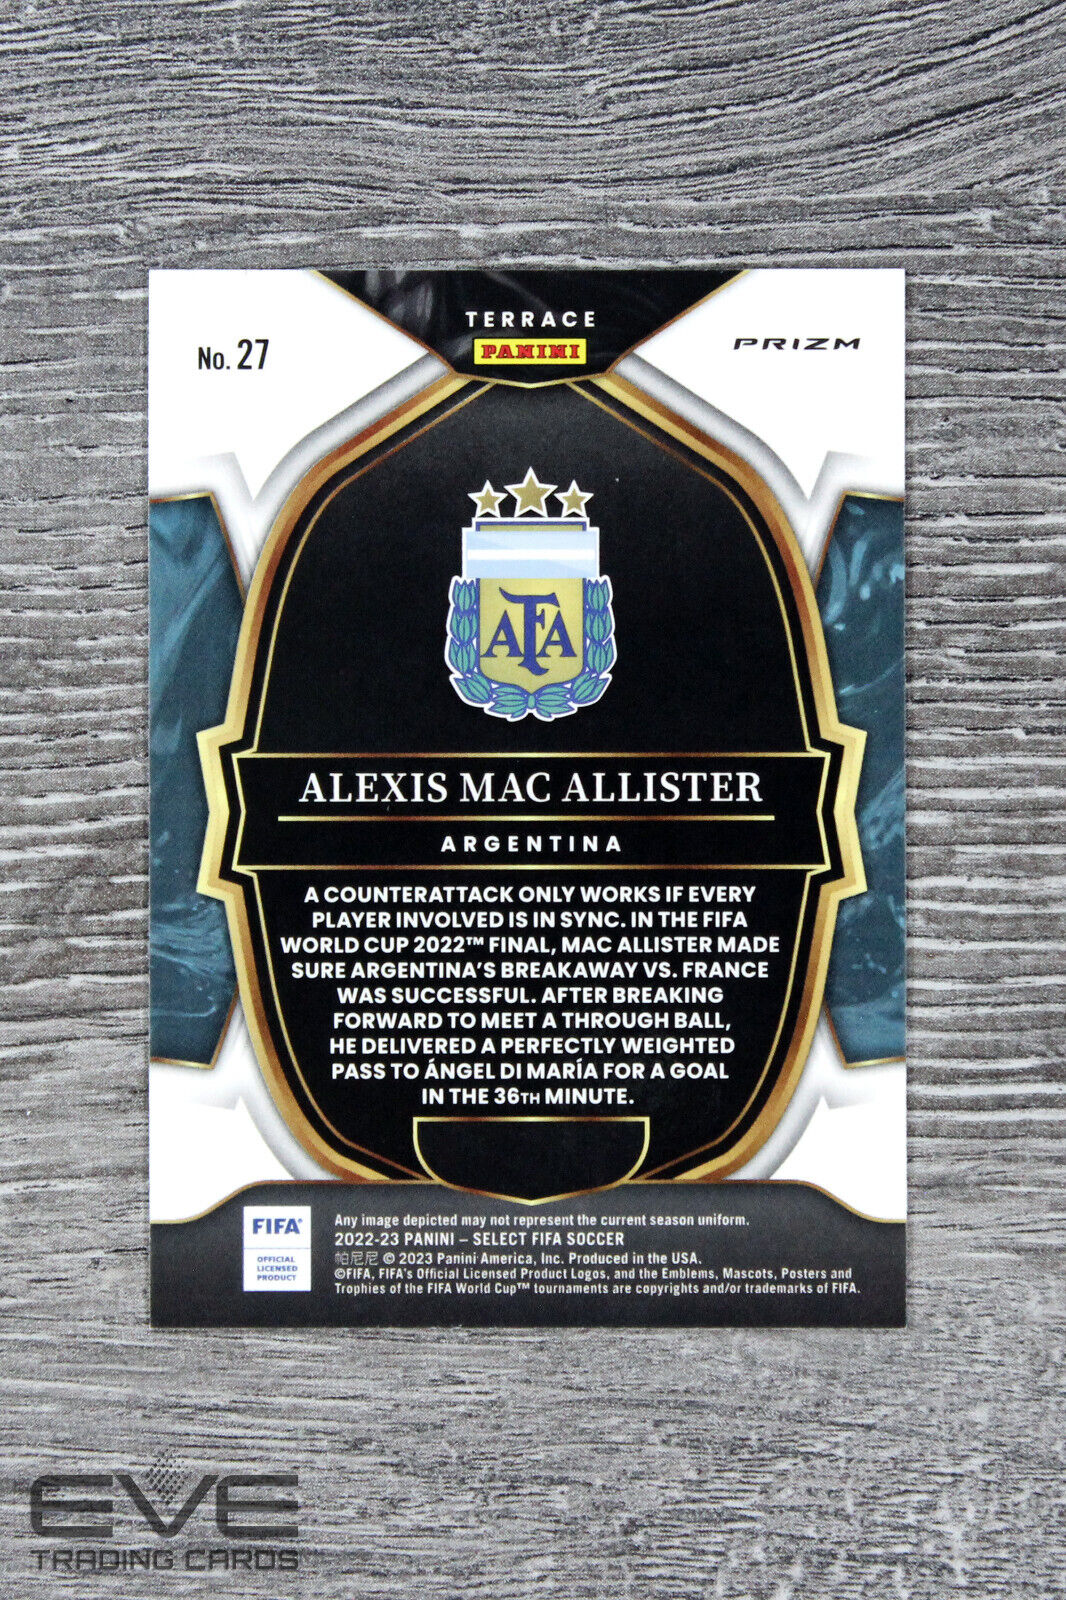 2023 Panini Select FIFA Soccer Card #27 Alexis Mac Allister Silver Prizm - NM/M